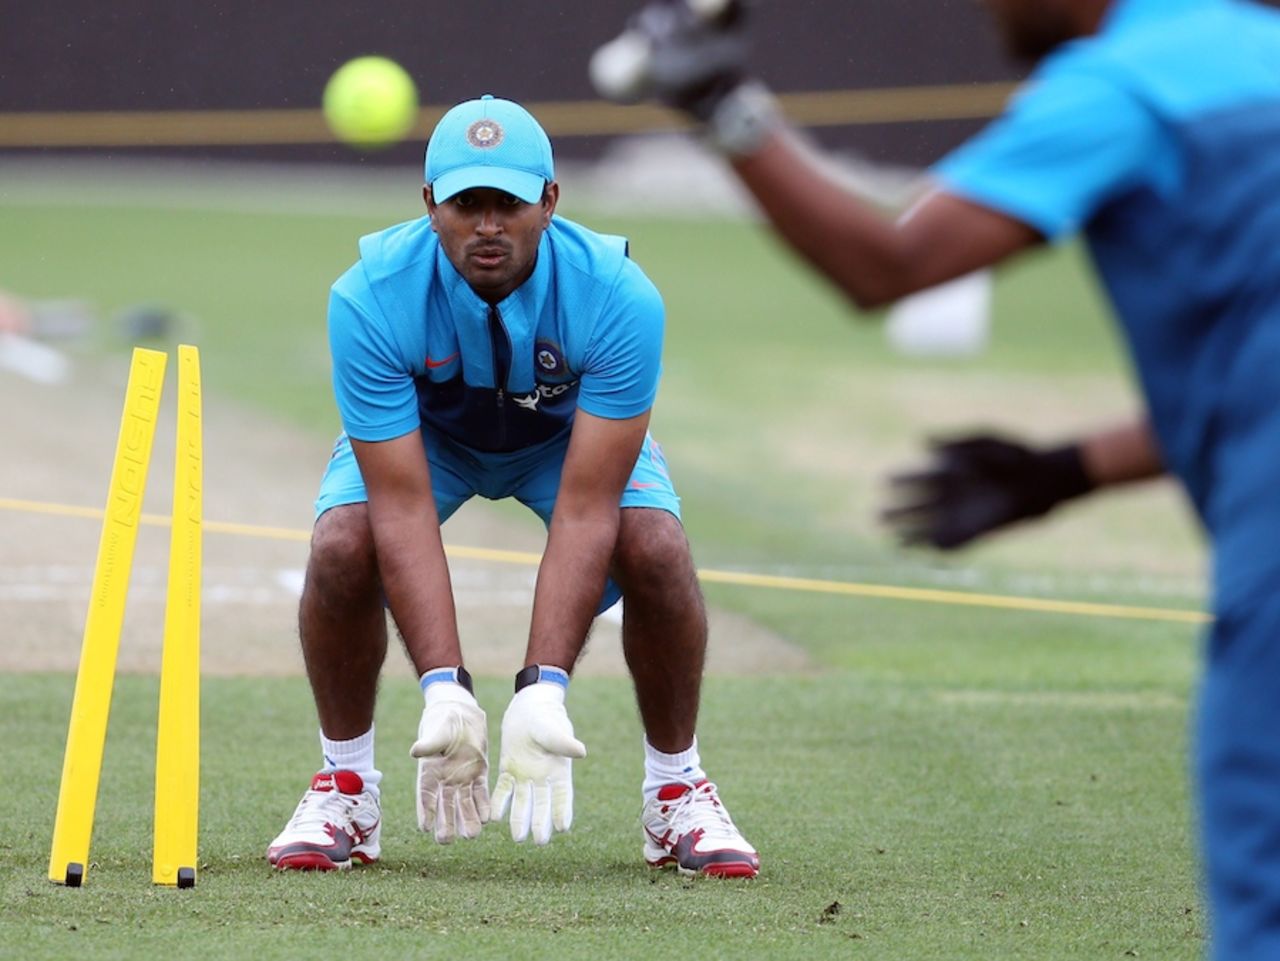 Ambati Rayudu hones his wicketkeeping skills, World Cup 2015, Hamilton, March 9, 2015